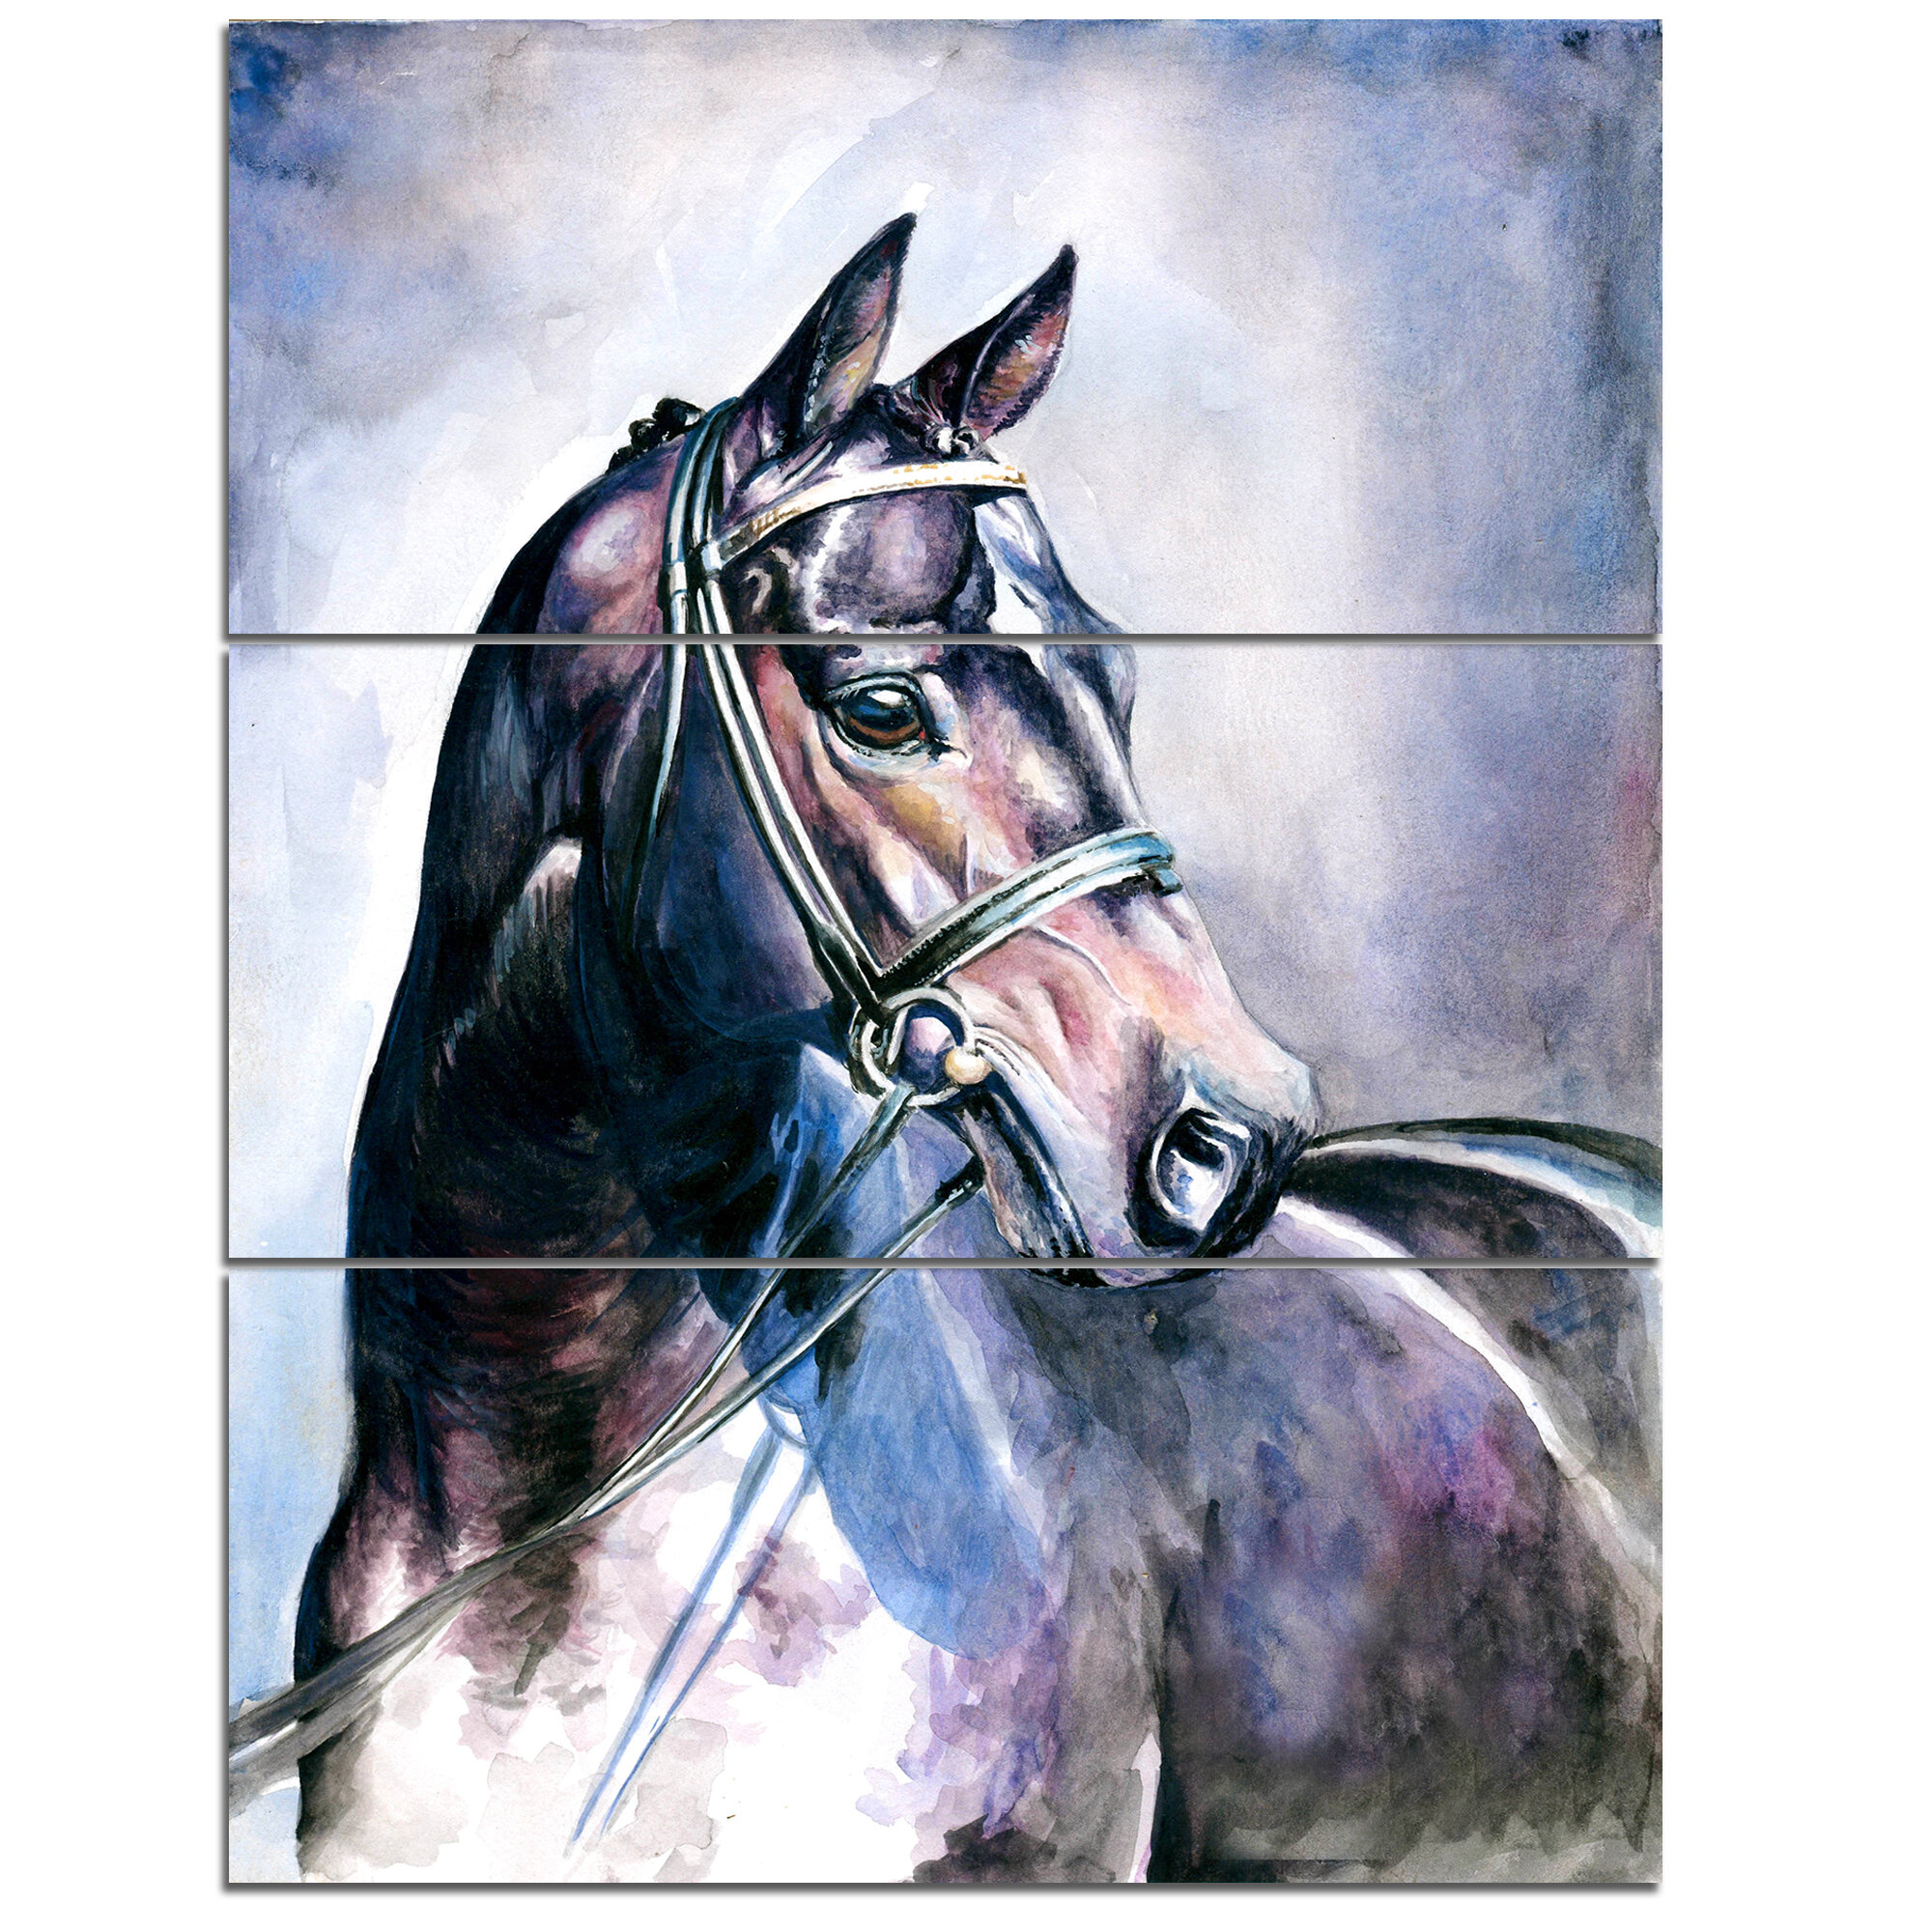 Designart Black Horse With Bridle 3 Piece Painting Print On Wrapped Canvas Set Wayfair